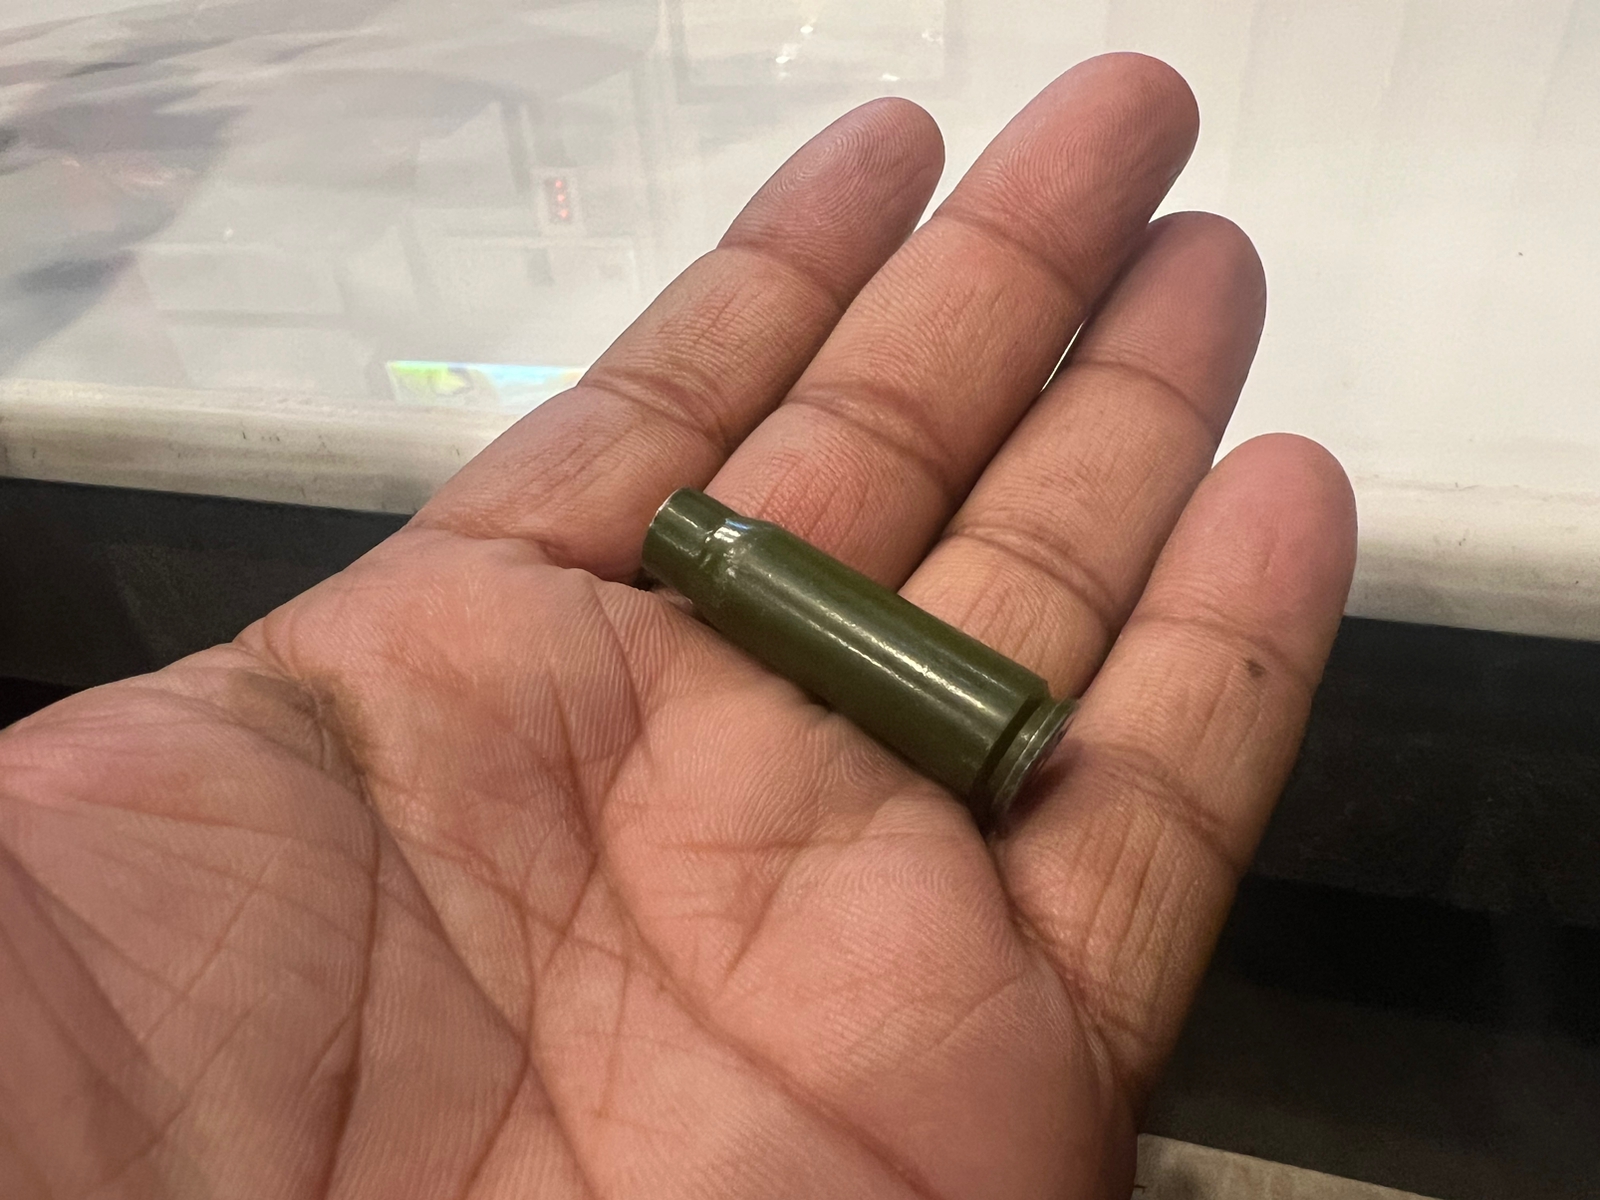 China made bullets used to kill Hindus in Rajouri